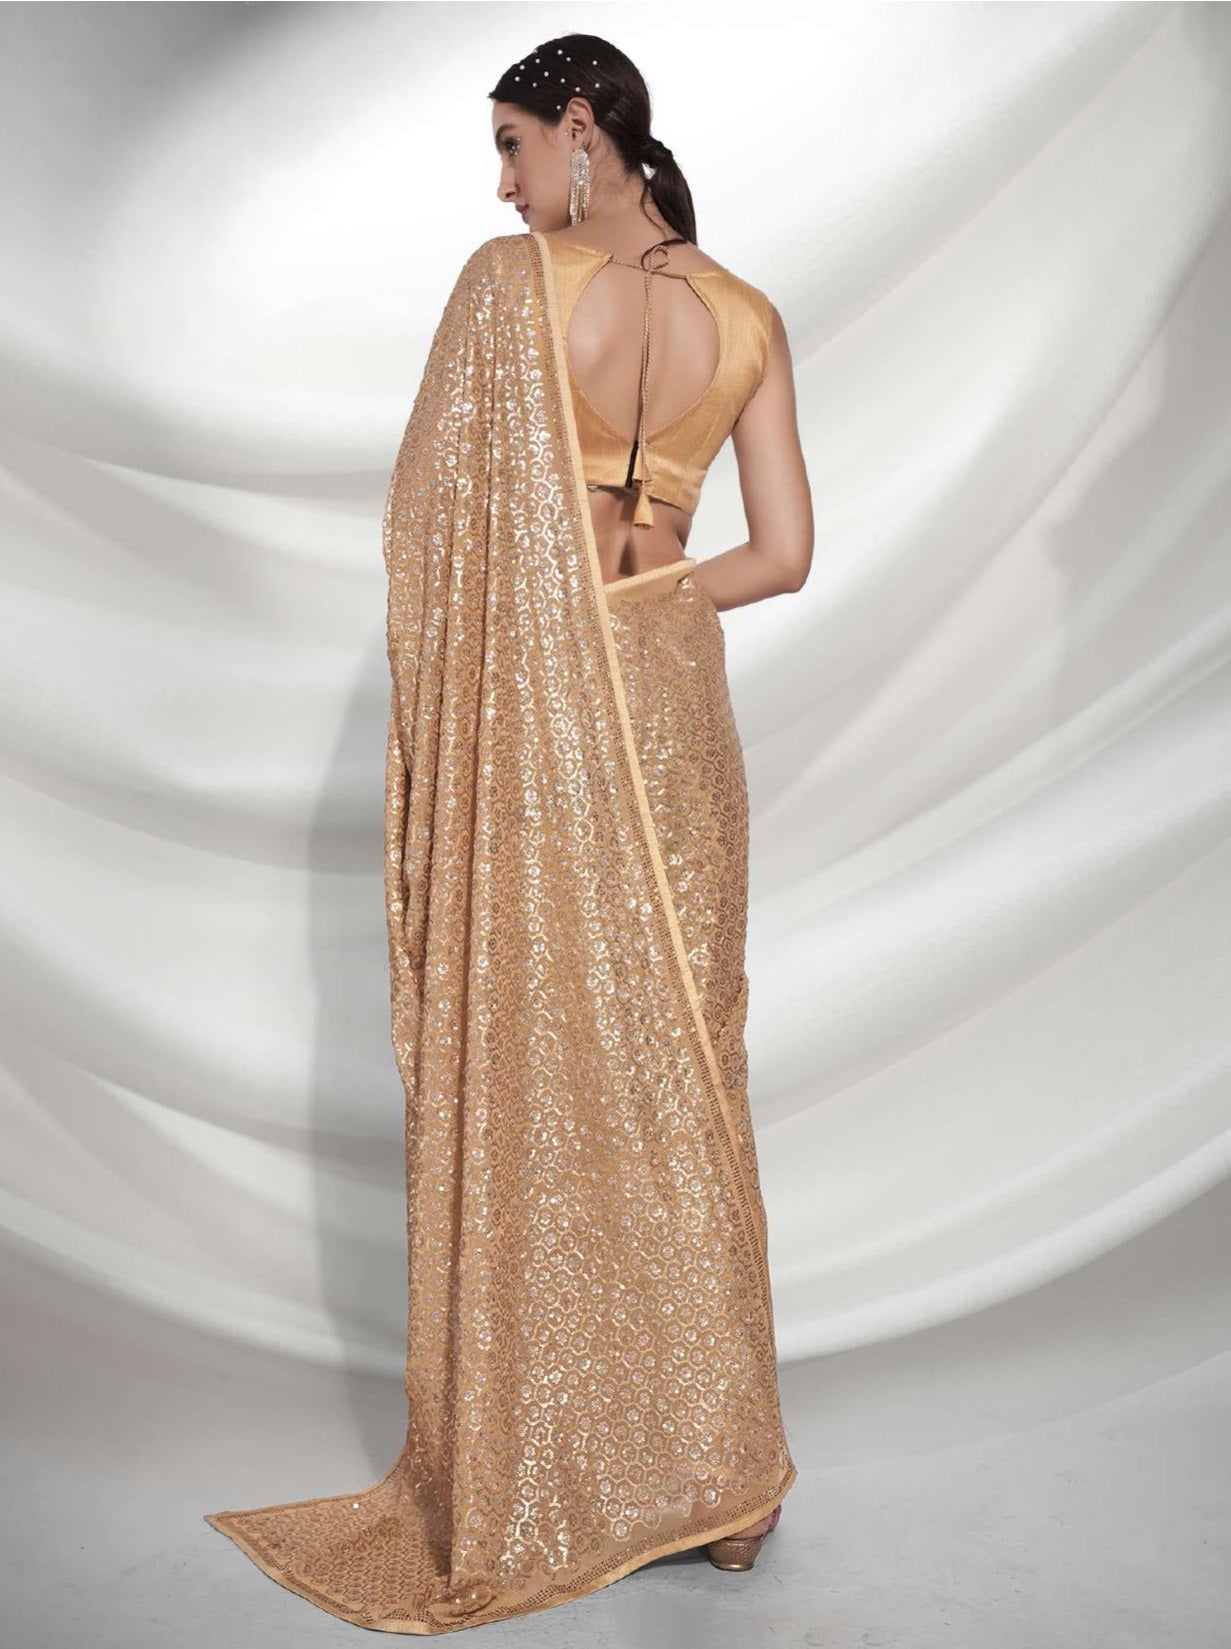 Women's Golden Designer Saree Collection - Dwija Fashion